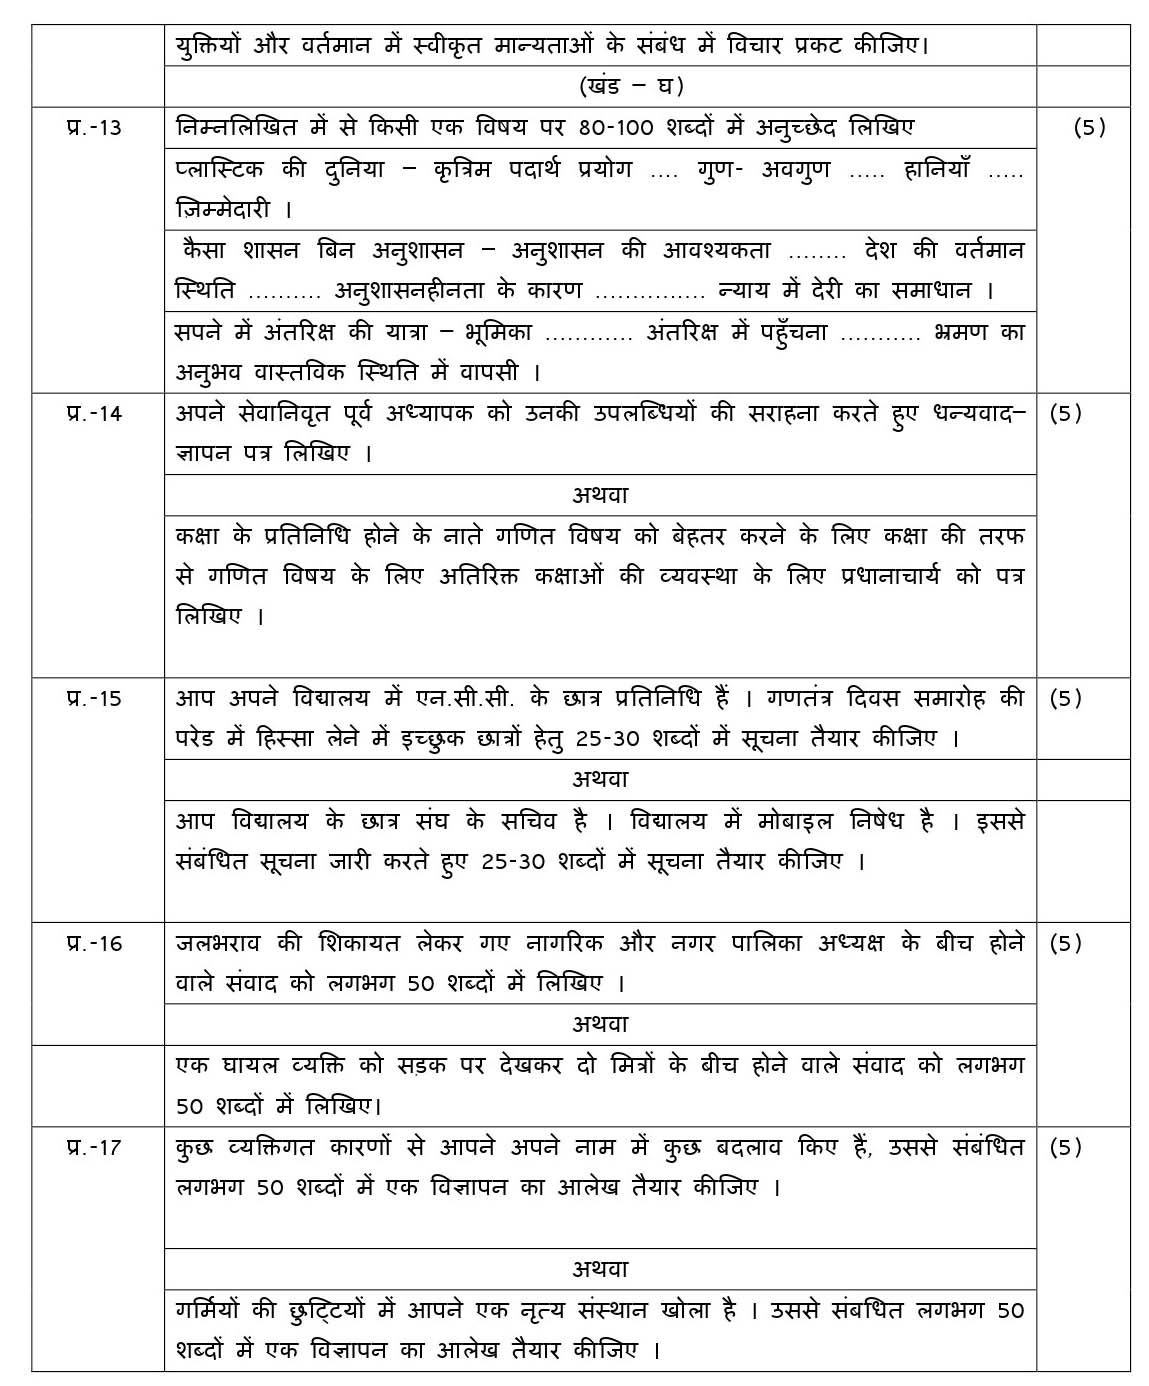 Hindi B CBSE Class X Sample Question Paper 2018-19 - Image 5